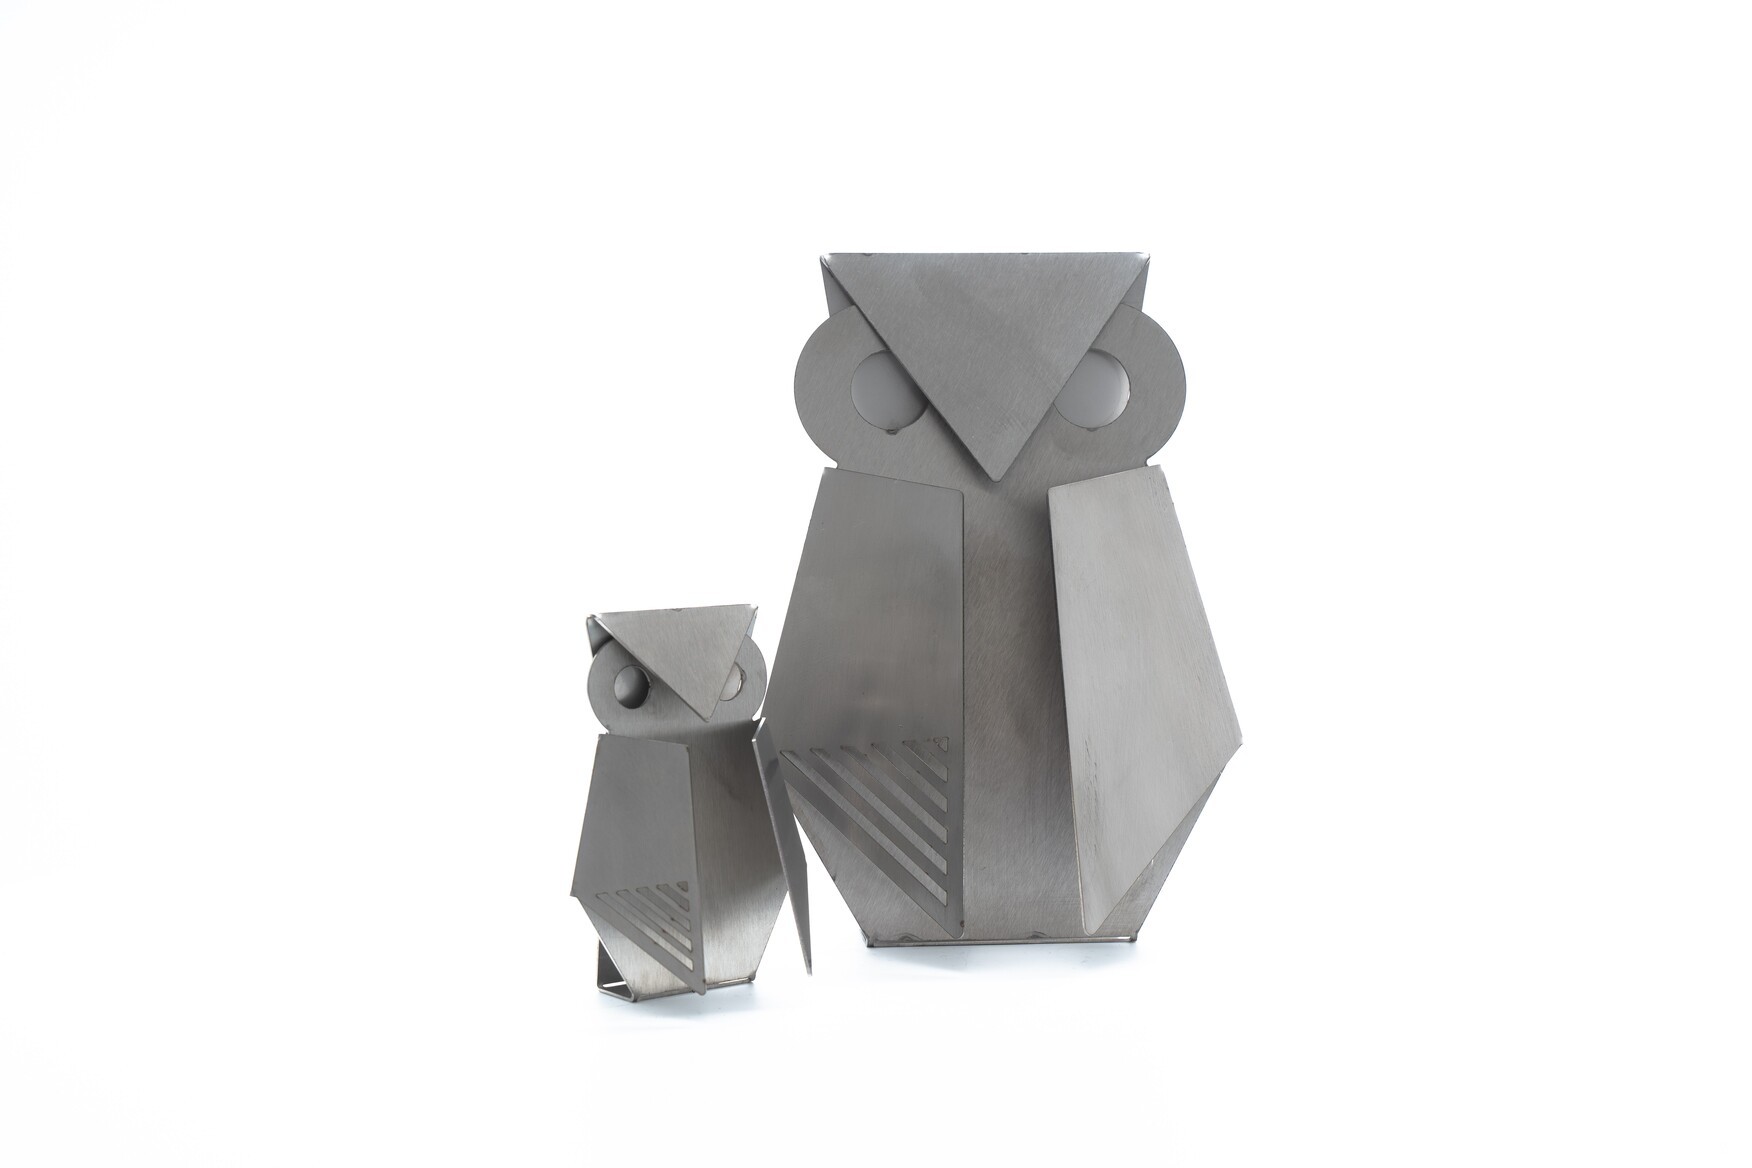 RVS Origami Vogel Uil Klein - Standbeeldje | 25 cm x 16 cm | Woonaccessoires